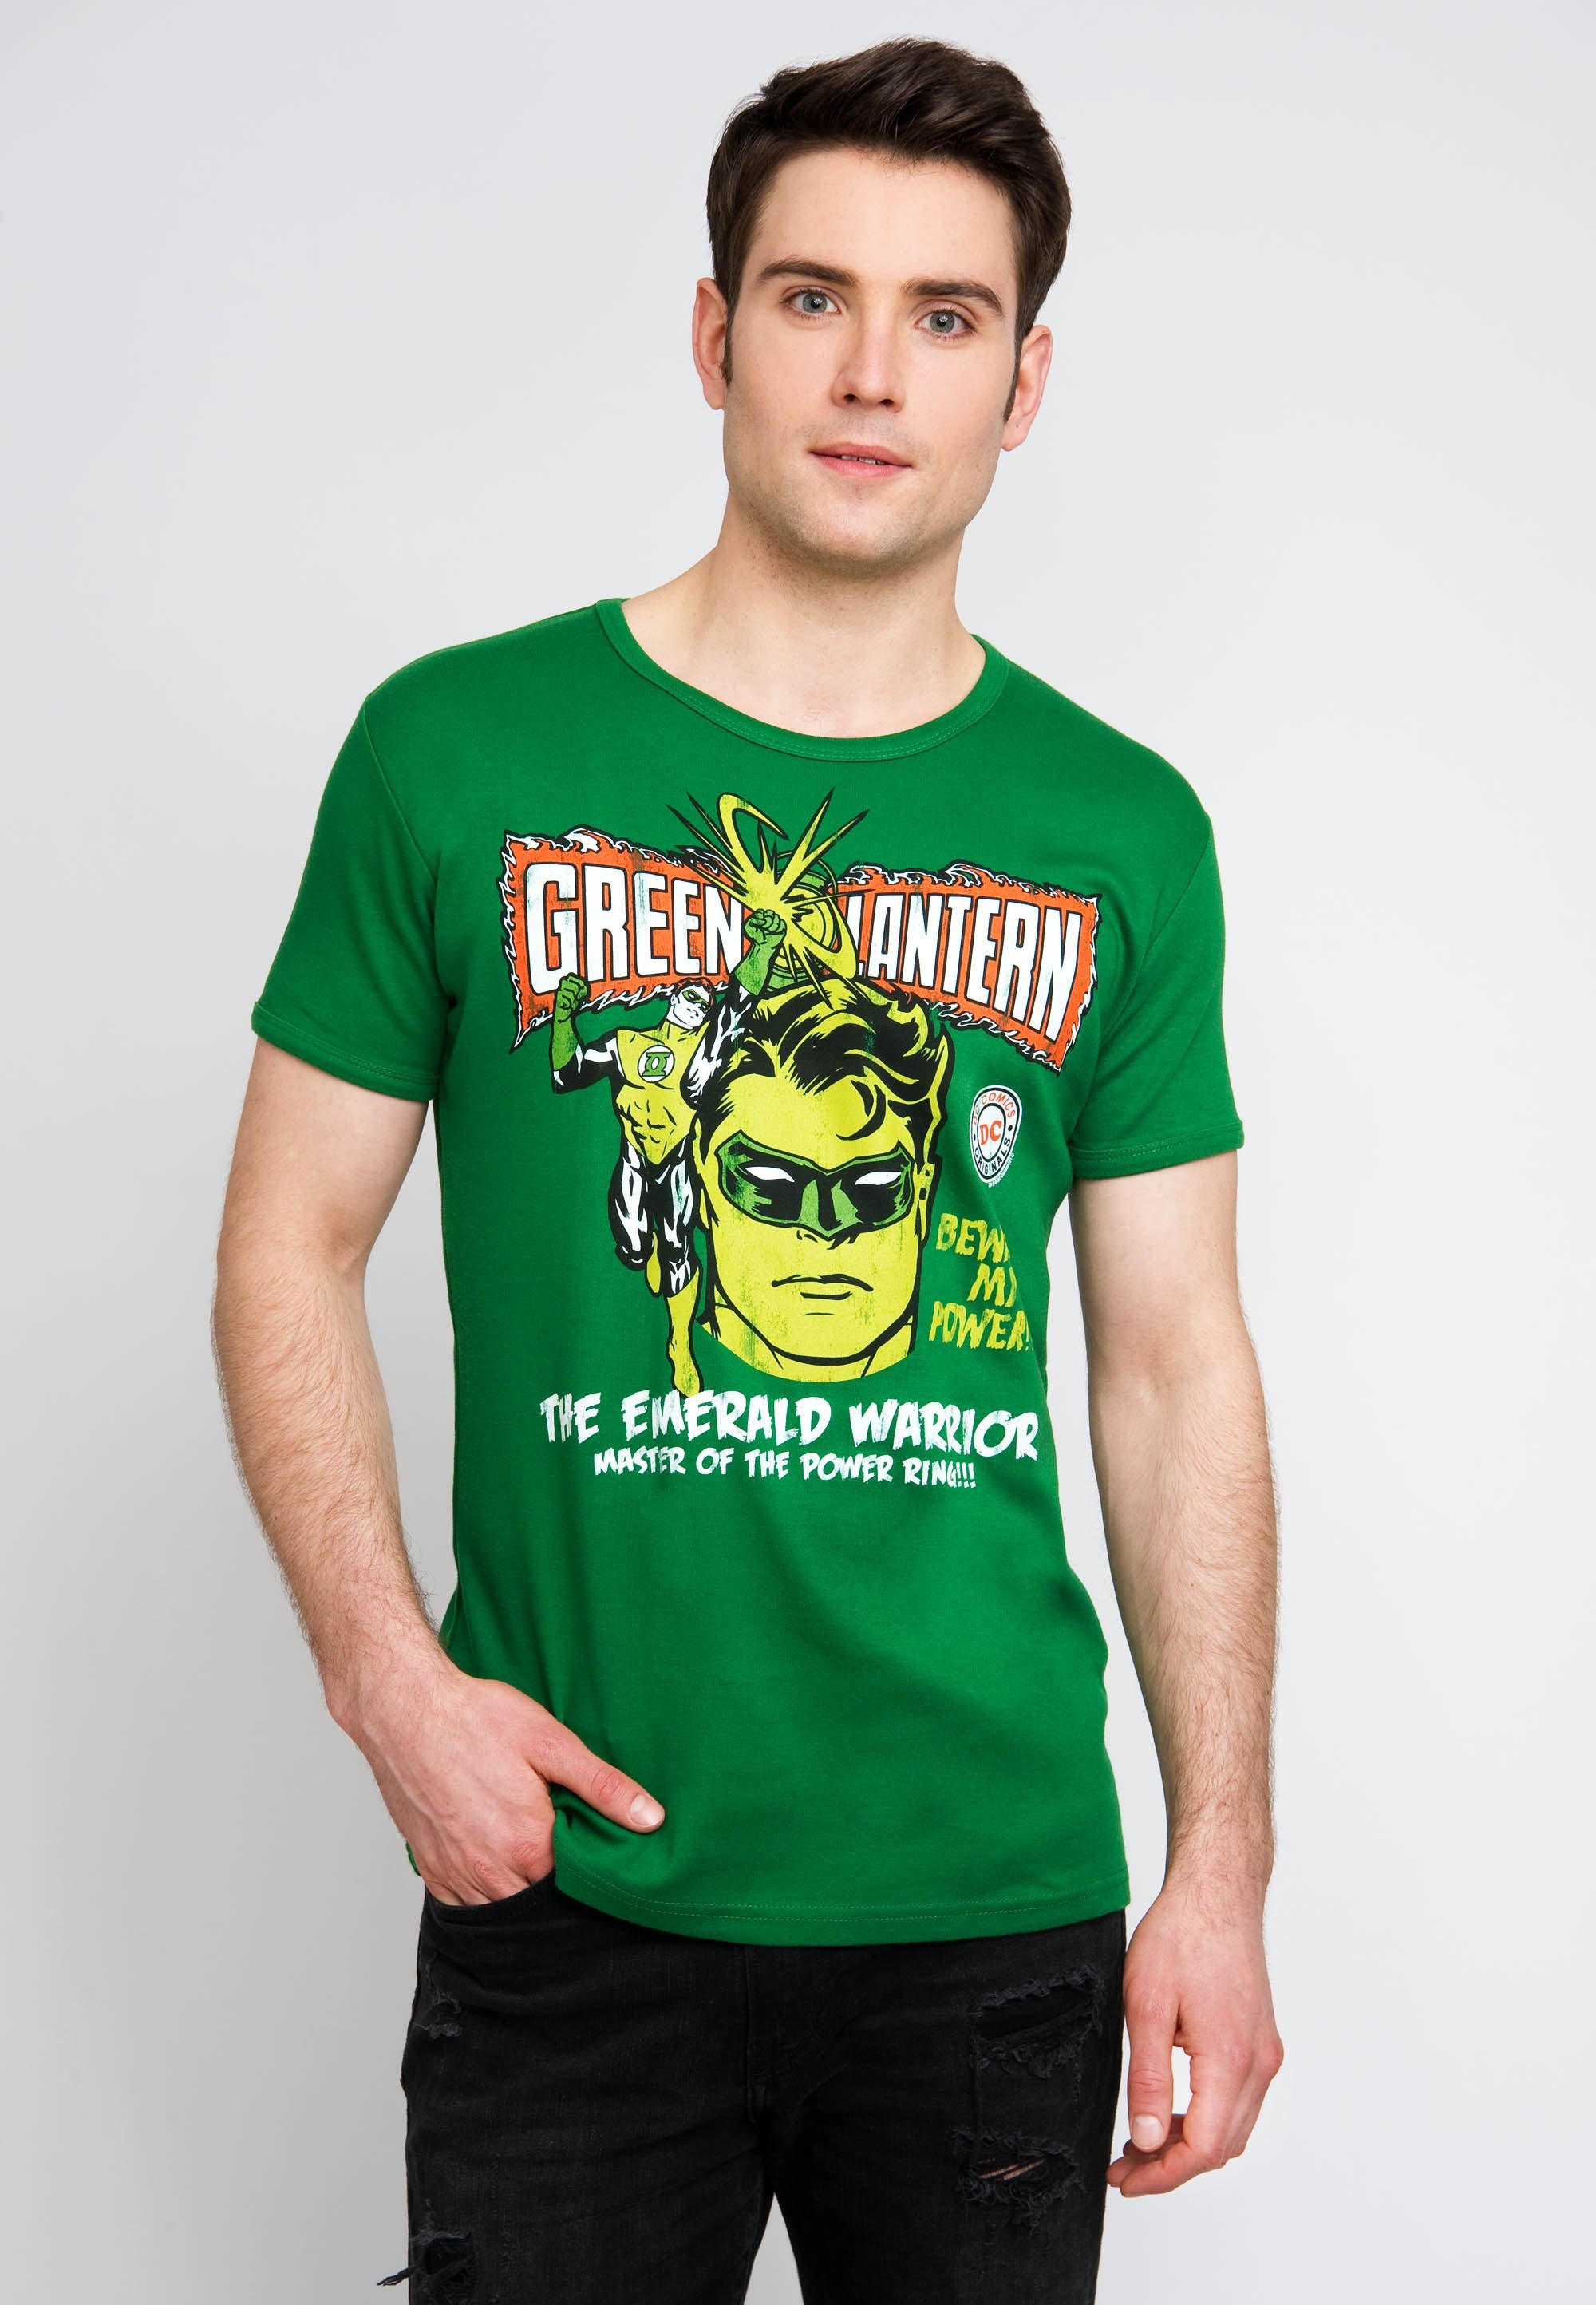 LOGOSHIRT T-Shirt Green Lantern Power mit klassichem Heldenmotiv grün